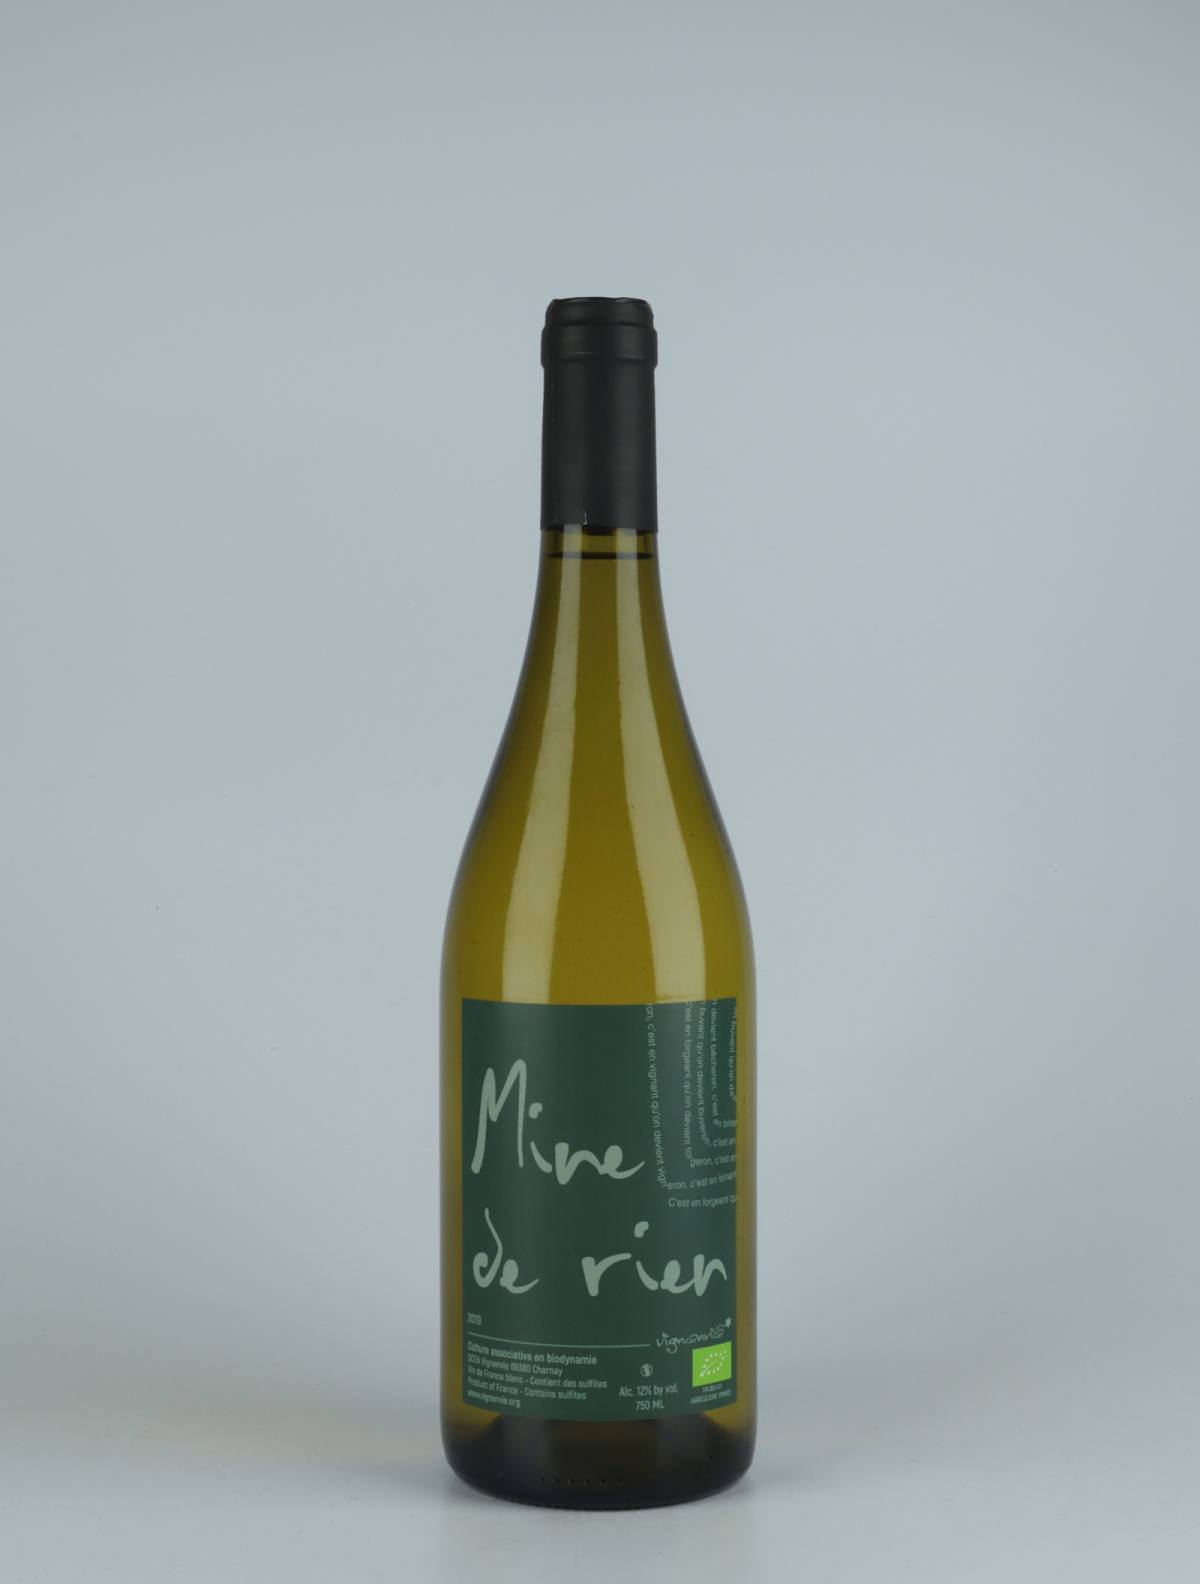 A bottle 2019 Mine de Rien White wine from , Beaujolais in France